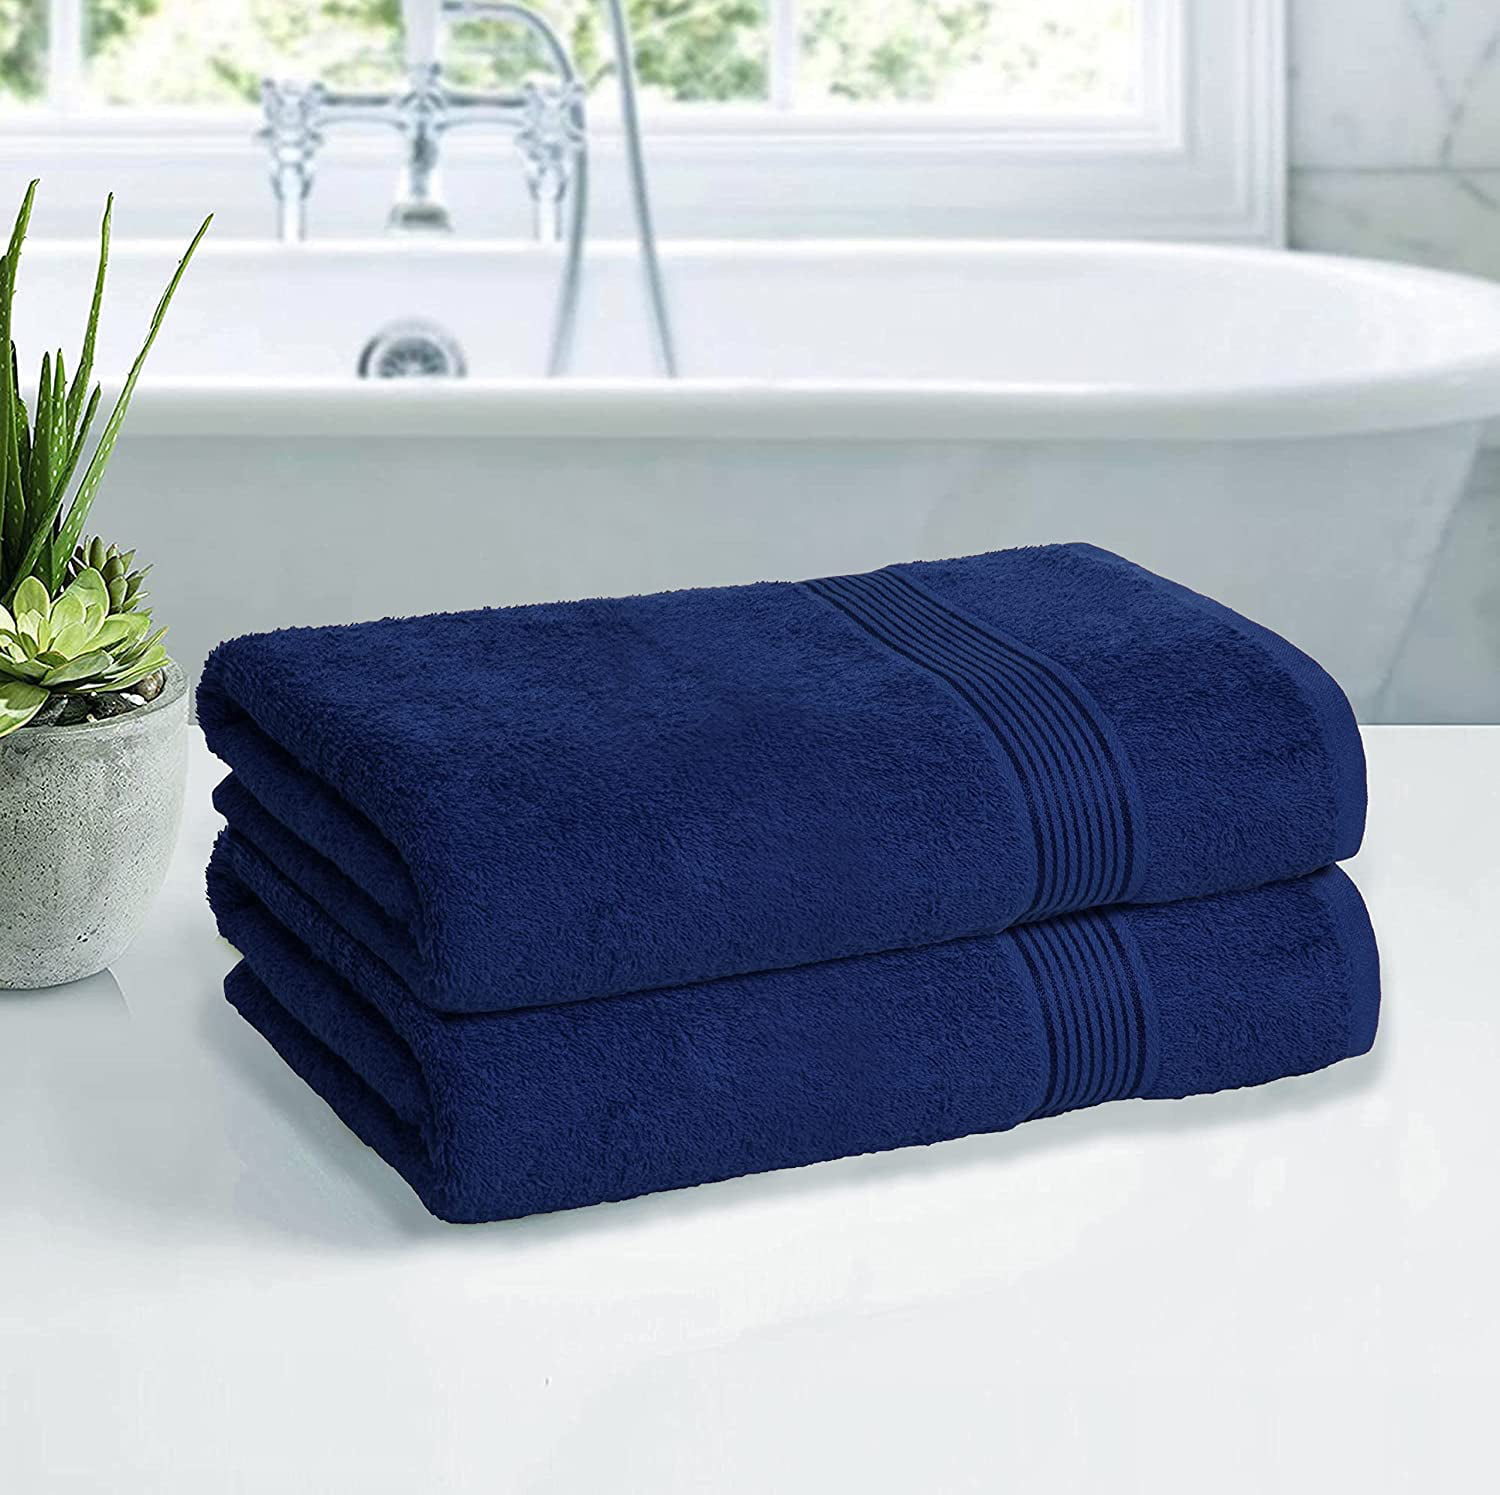 BELIZZI HOME 4 Pack Bath Towel Set 27x54, 100% Ring Spun Cotton, Ultra Soft  Highly Absorbent Machine Washable Hotel Spa Quality Bath Towels for Bathroom,  4 Bath Towels Jade 